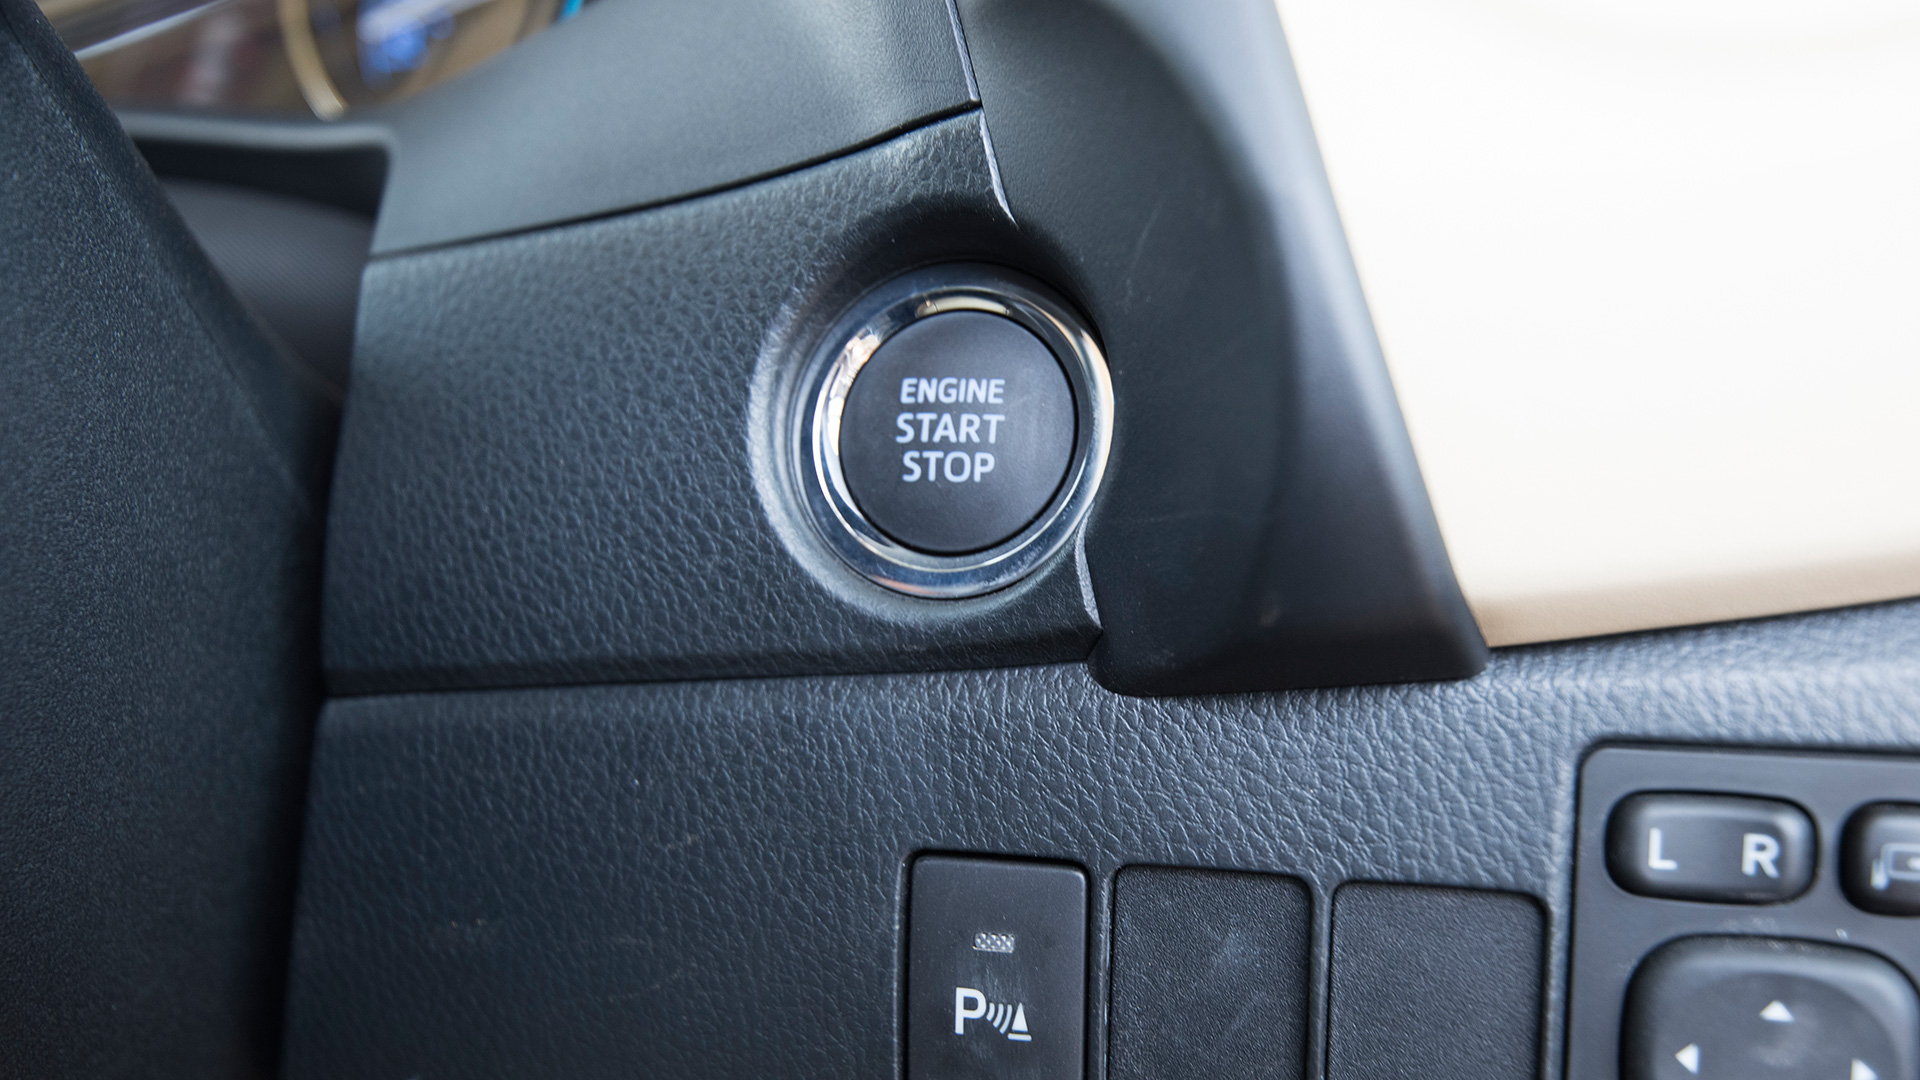 Toyota Corolla Altis 2017 VL (CVT) Interior